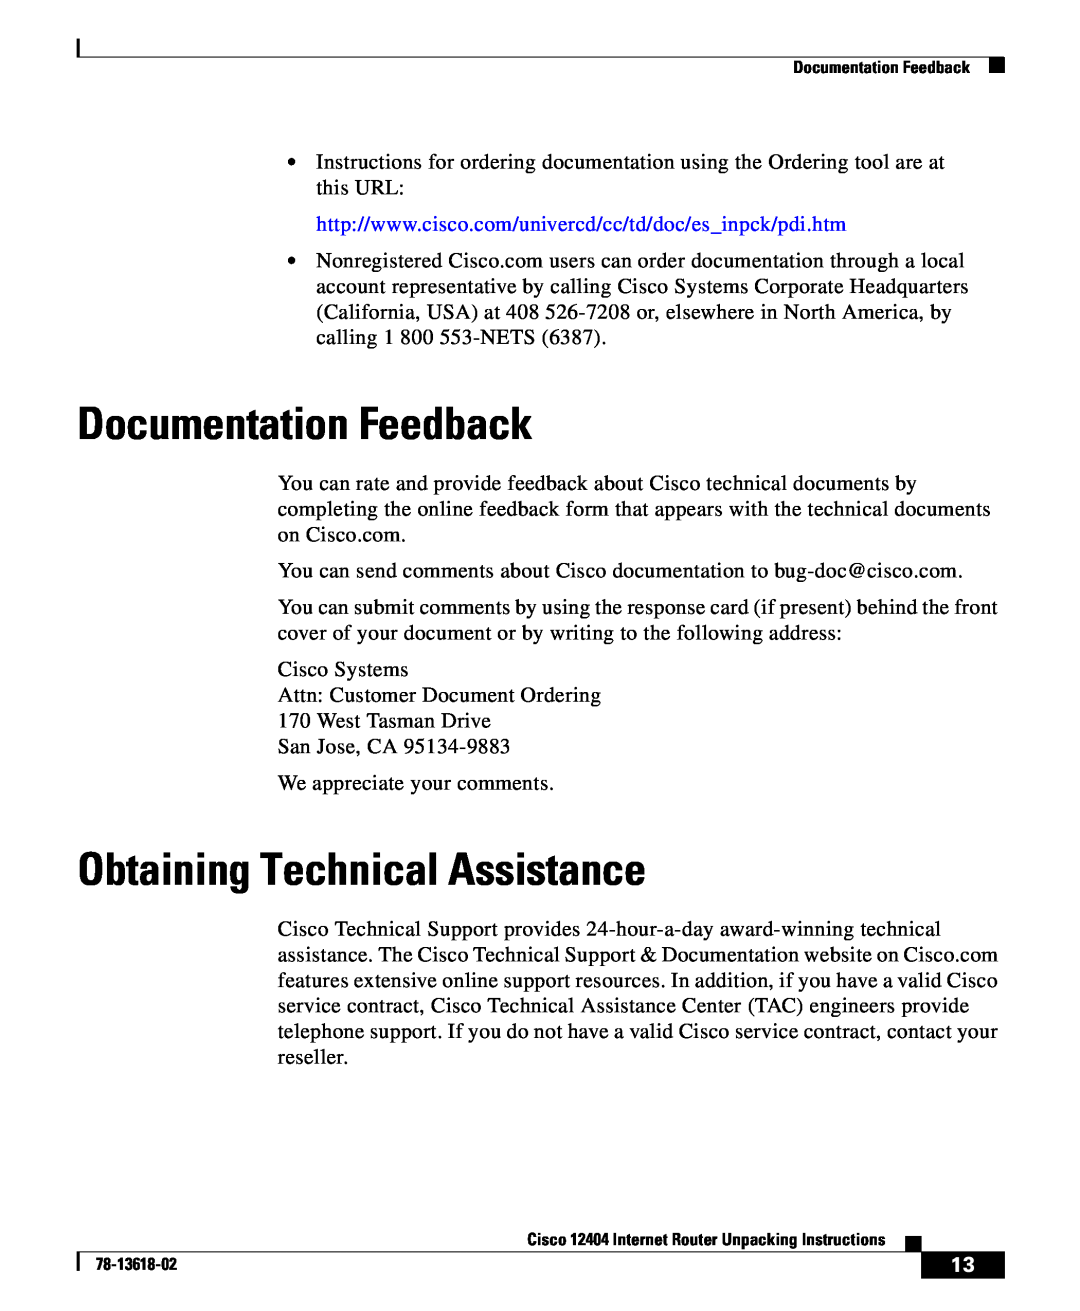 Cisco Systems 12404 manual Documentation Feedback, Obtaining Technical Assistance 